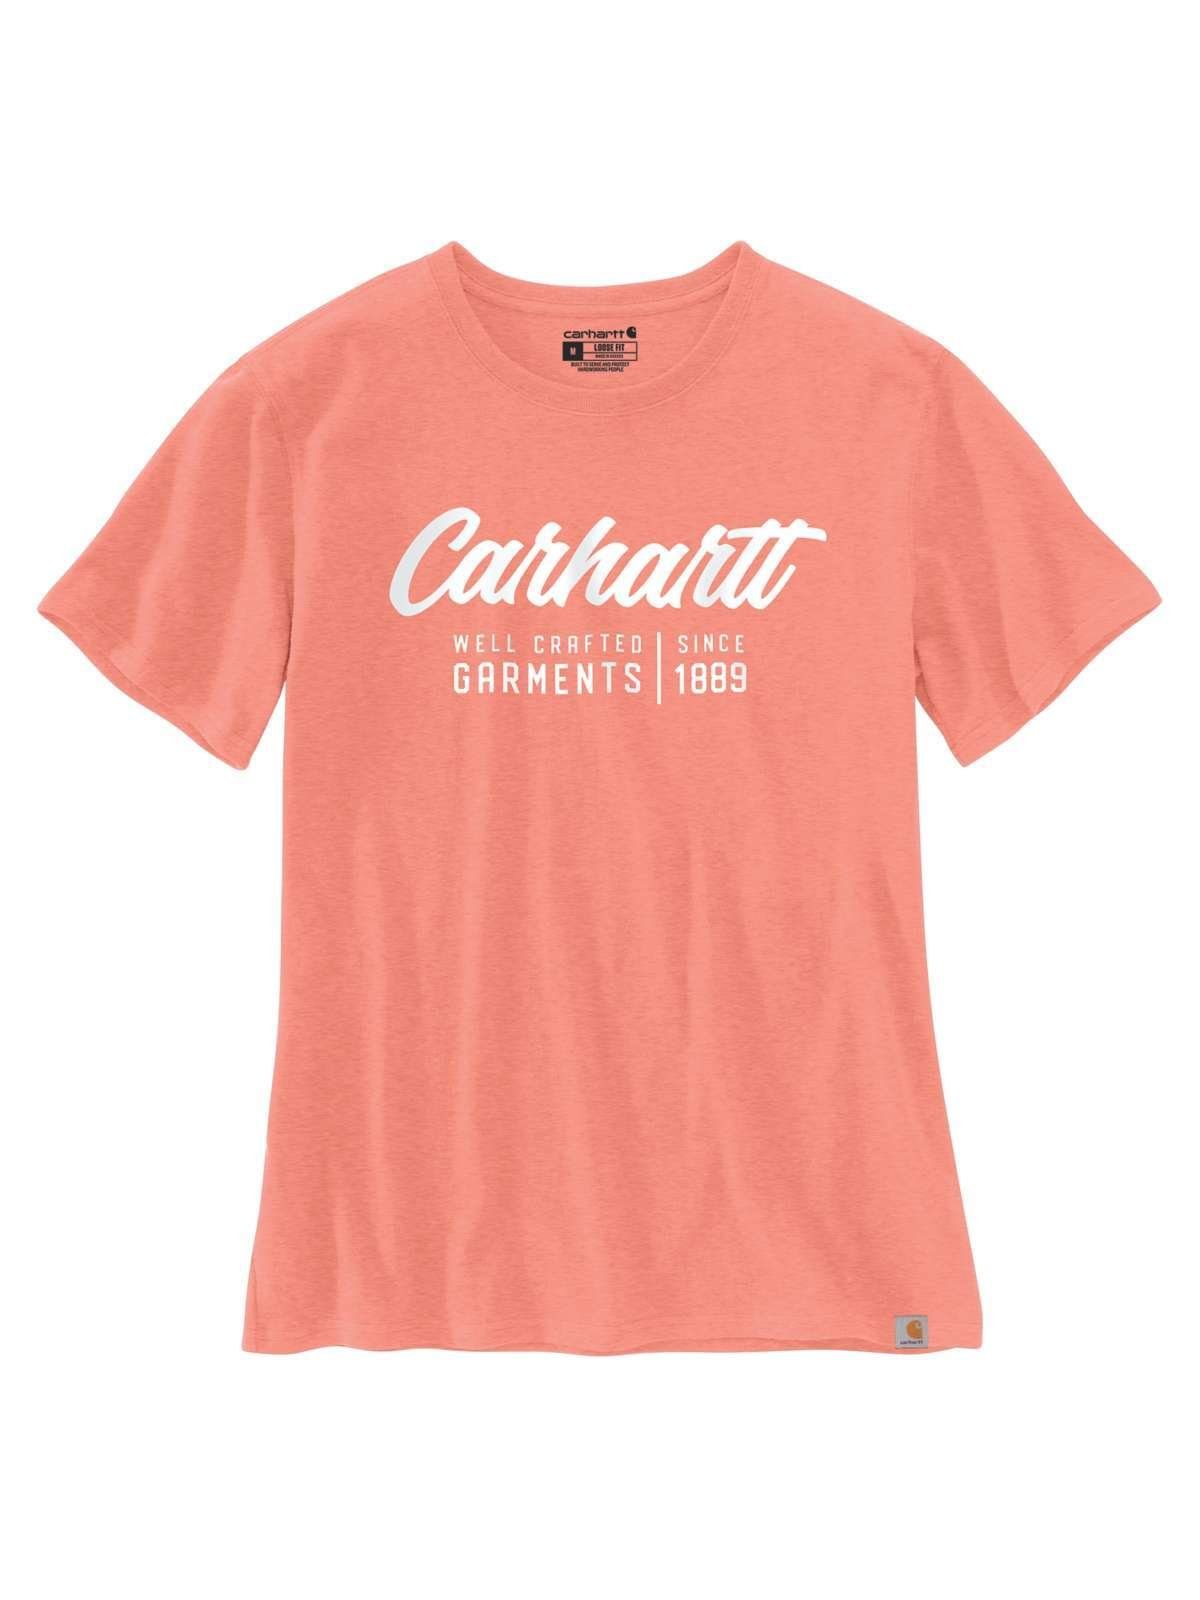 hibiscus T-shirt T-Shirt Carhartt Carhartt Graphic heather